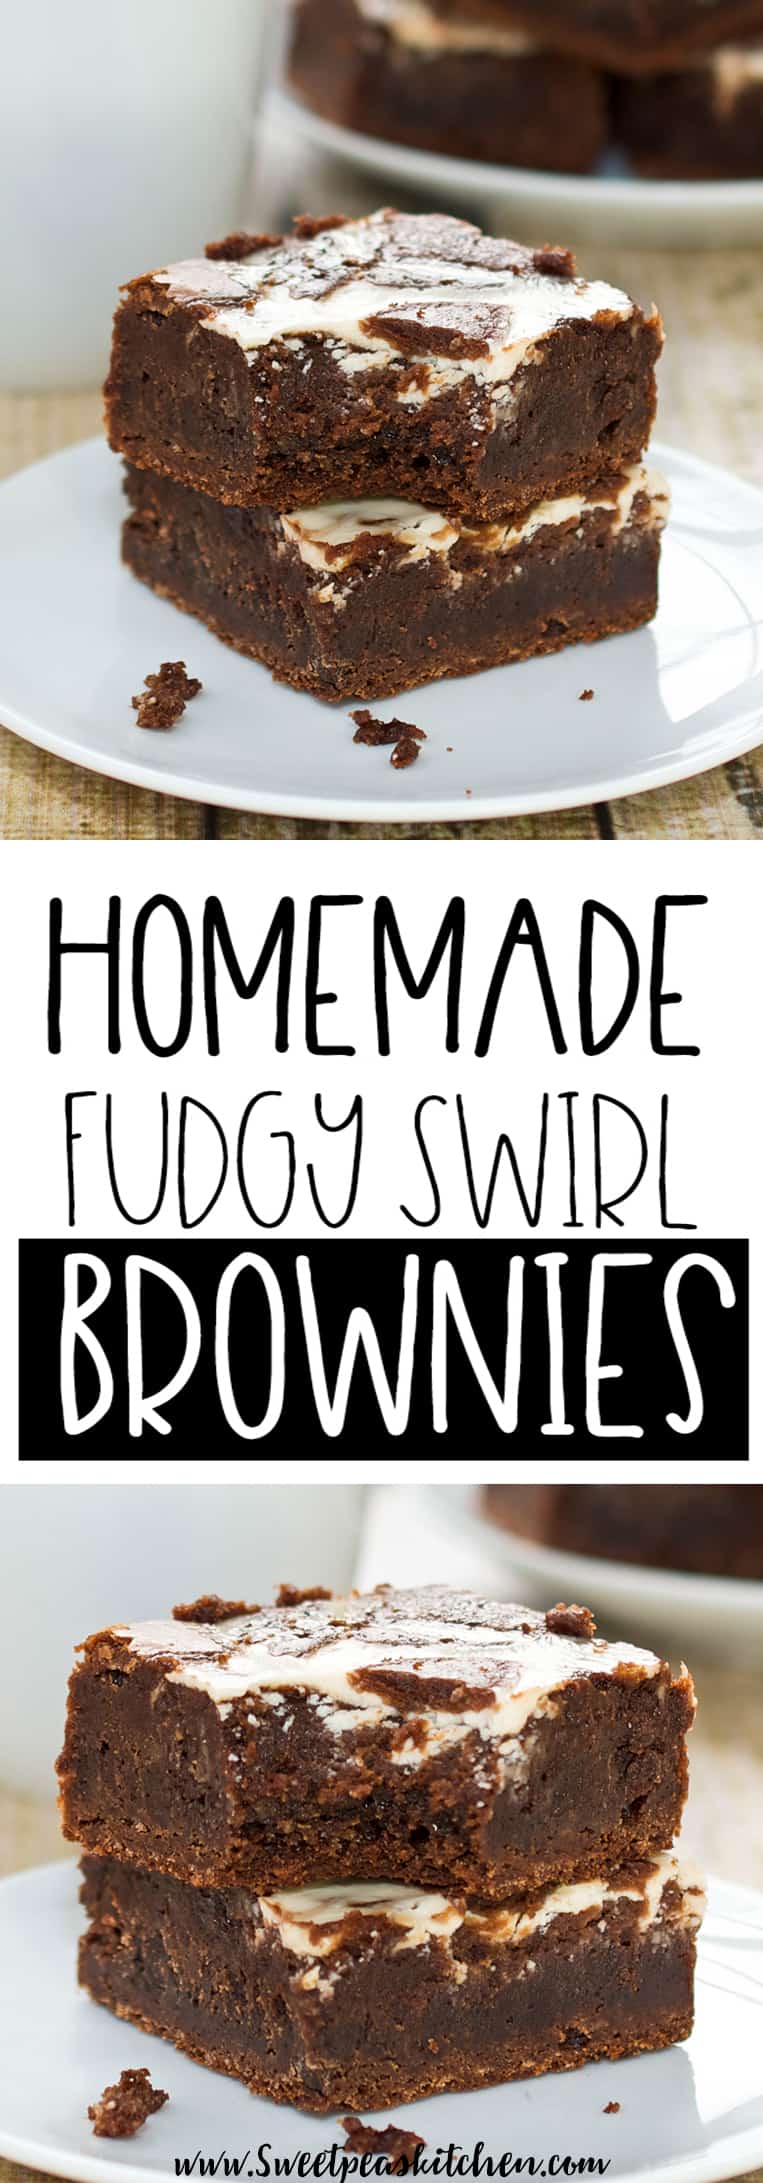 Easy Homemade Fudgy Swirl Brownies Recipe